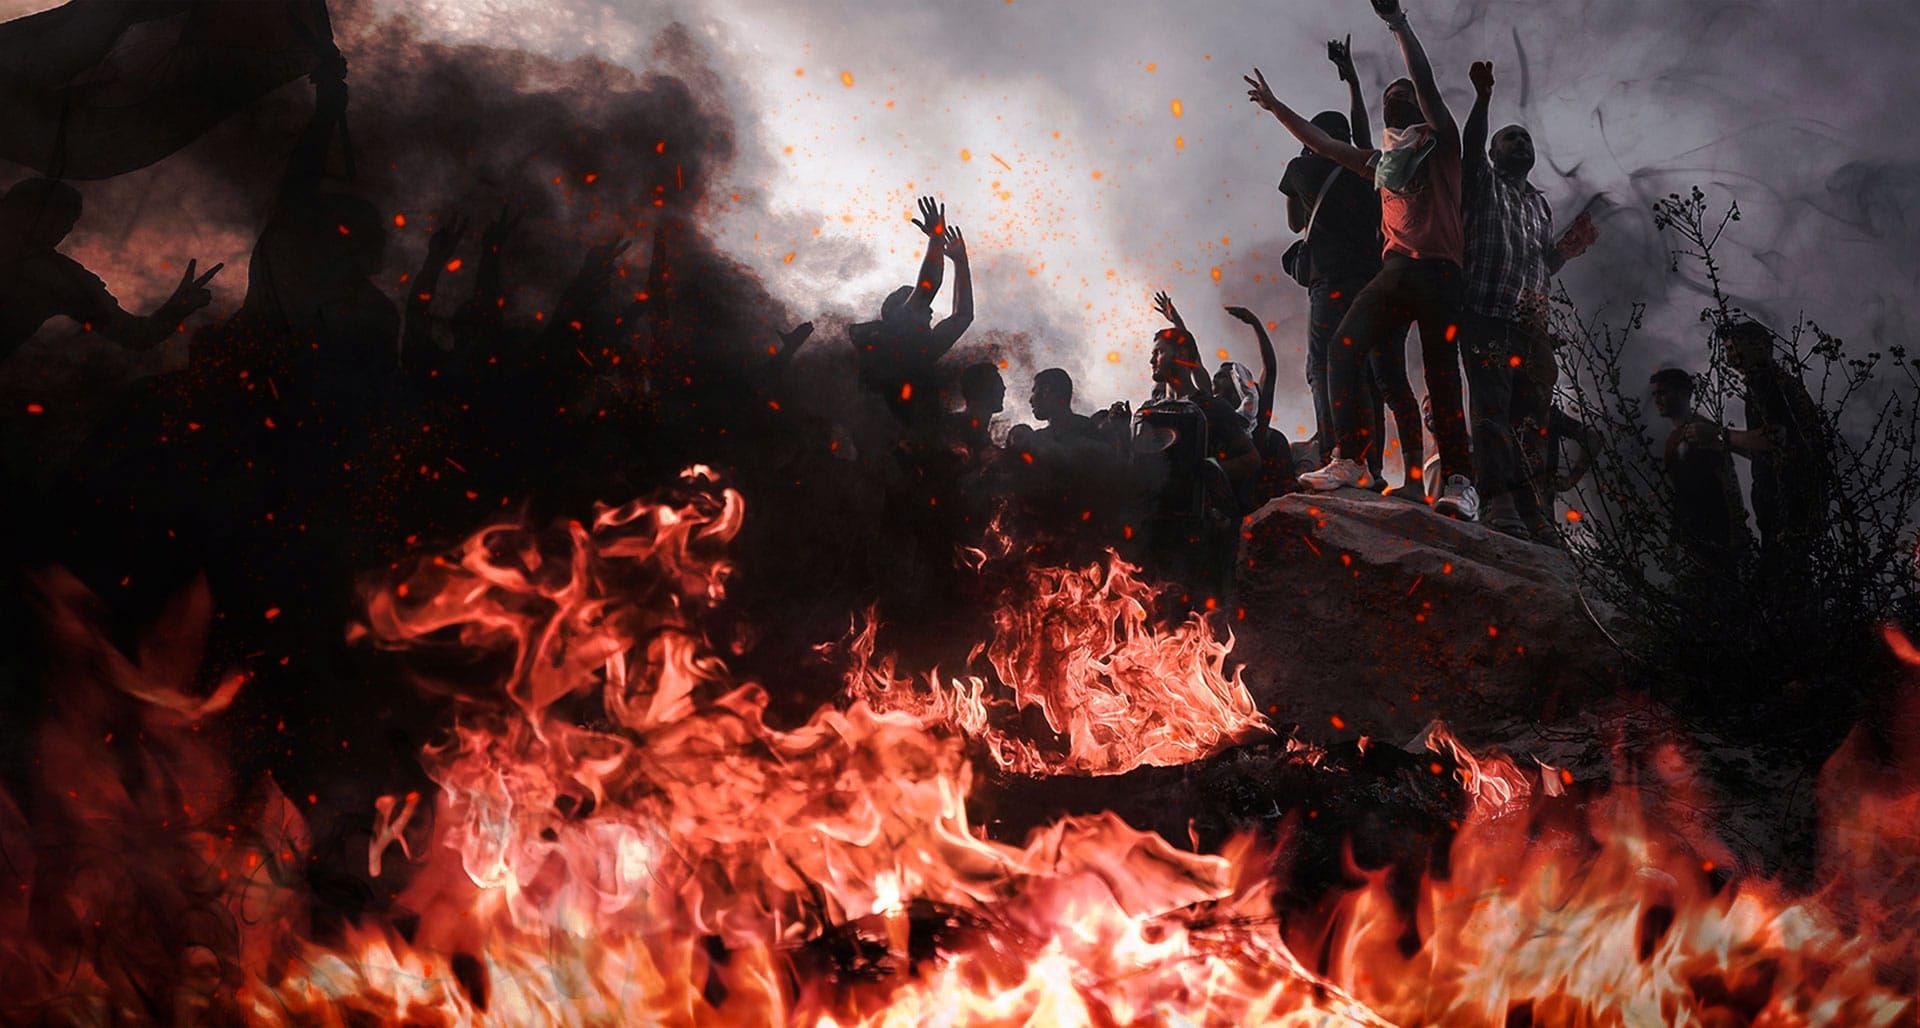 Nakba riots Image credit: Mustafa Hassona/Anadolu Agency via Getty Images